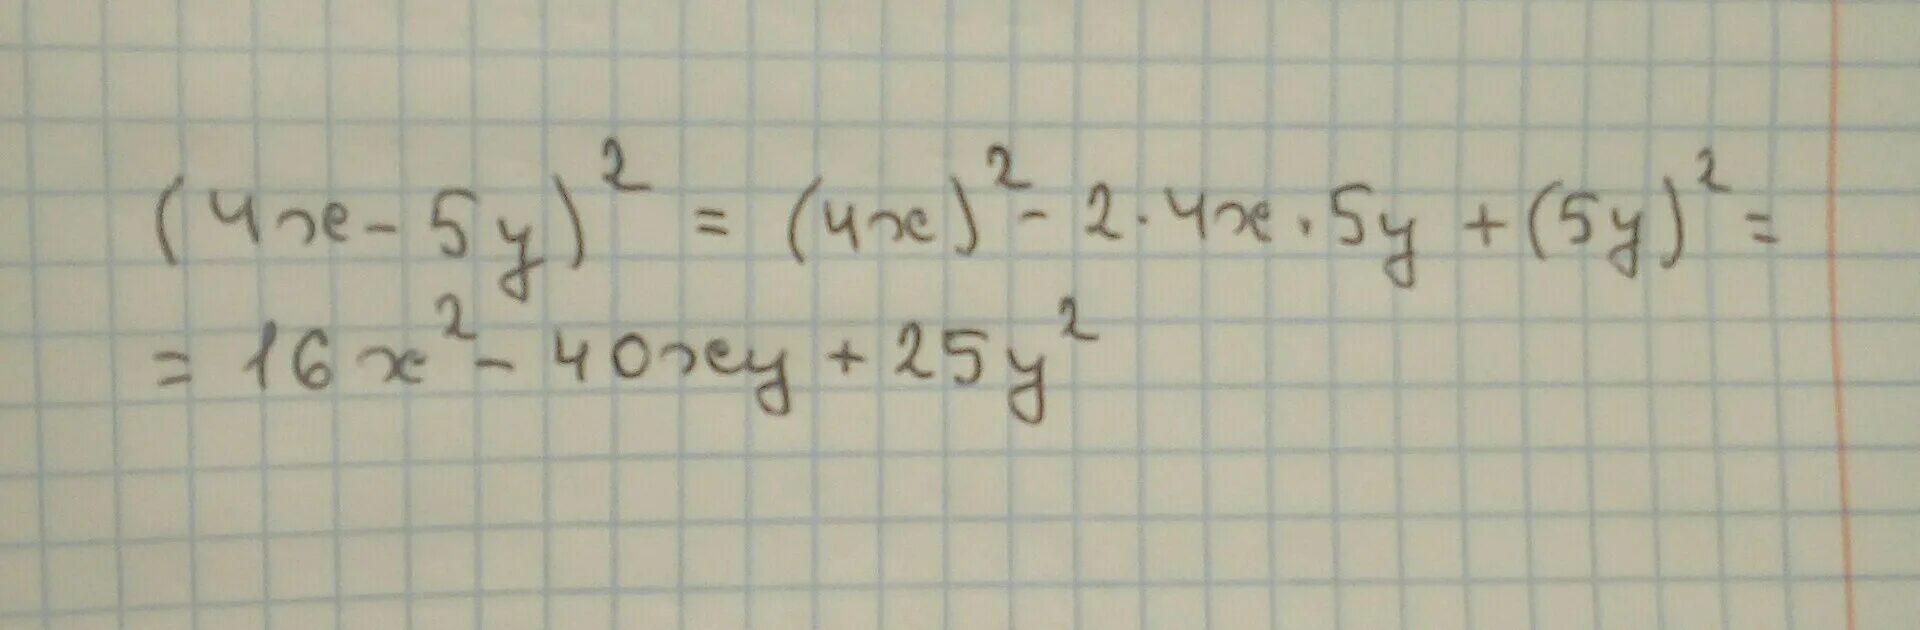 Преобразуйте в многочлен 2а 3. (А+2)*(А-2)-(Б-2)*(2+Б). Преобразуйте в многочлен 3а+4 в 2 степени. А:Б-а2-б2:б2:а+б:б. Преобразуйте выражение в многочлен 3/4x-y.